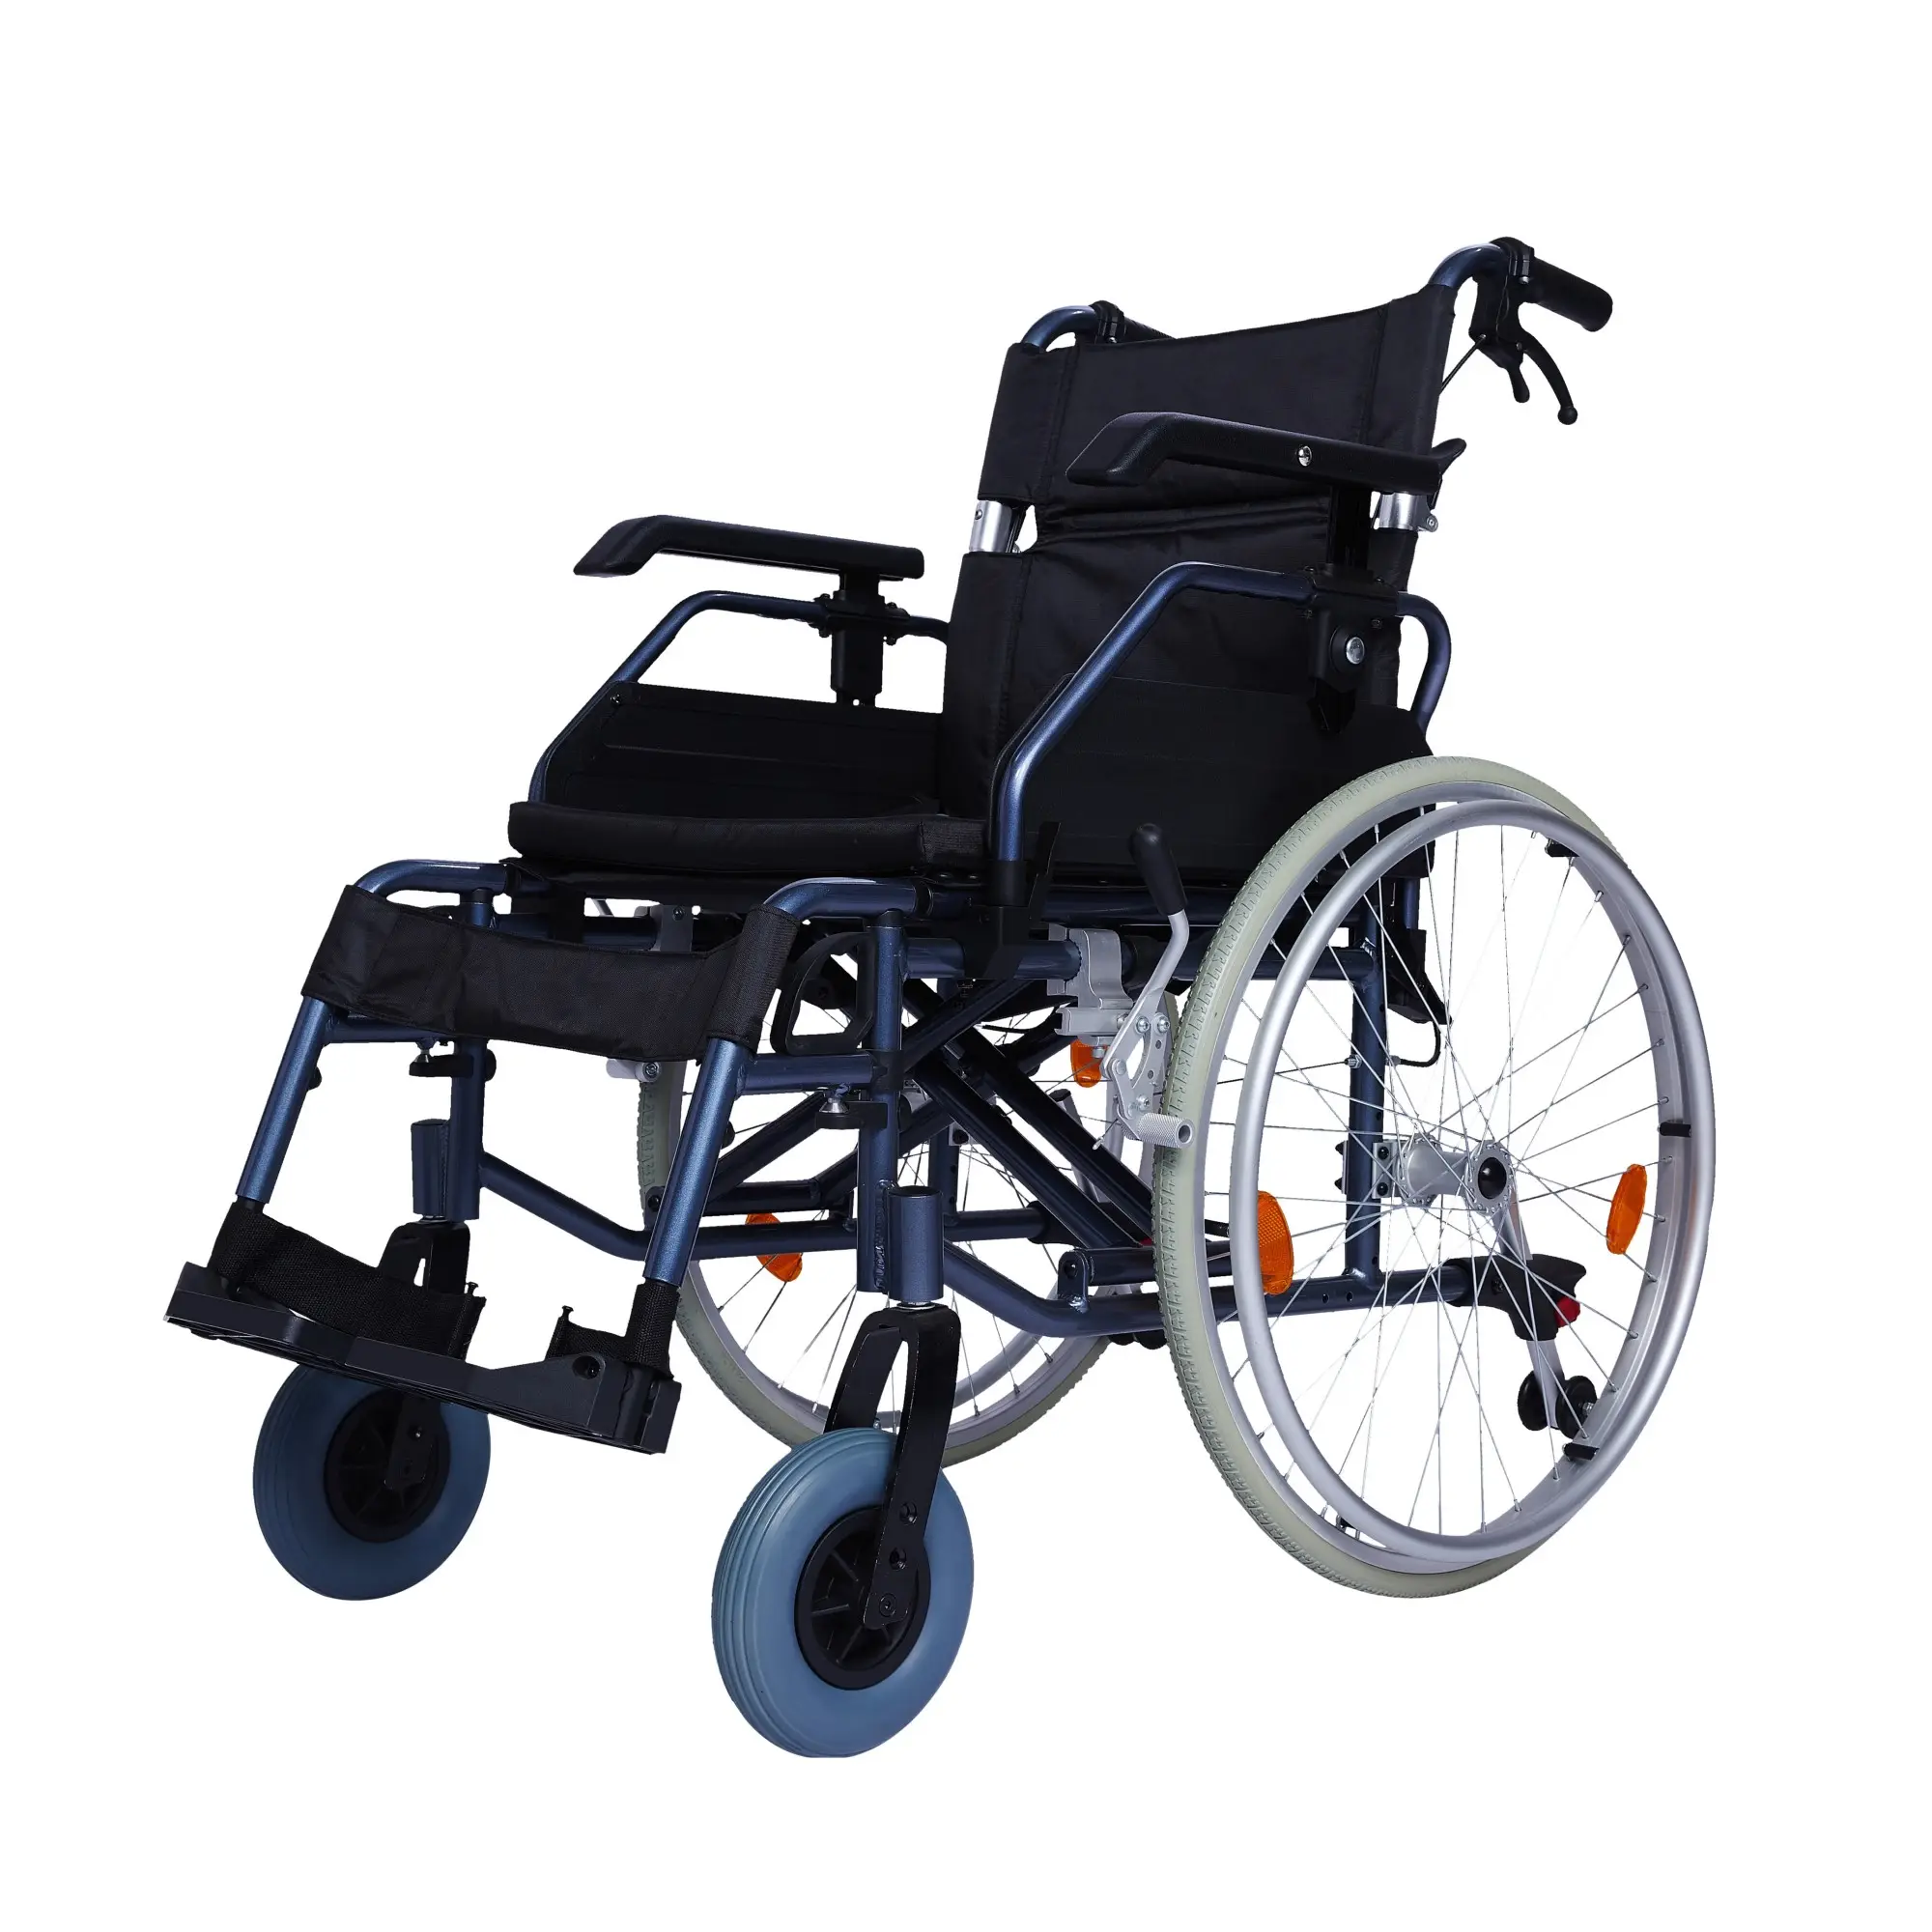 lightweight stroller wheelchair adults lightweight for seniors aluminum MANUAL FACTORY MANUFACTURER HIGH QUALITY quick release